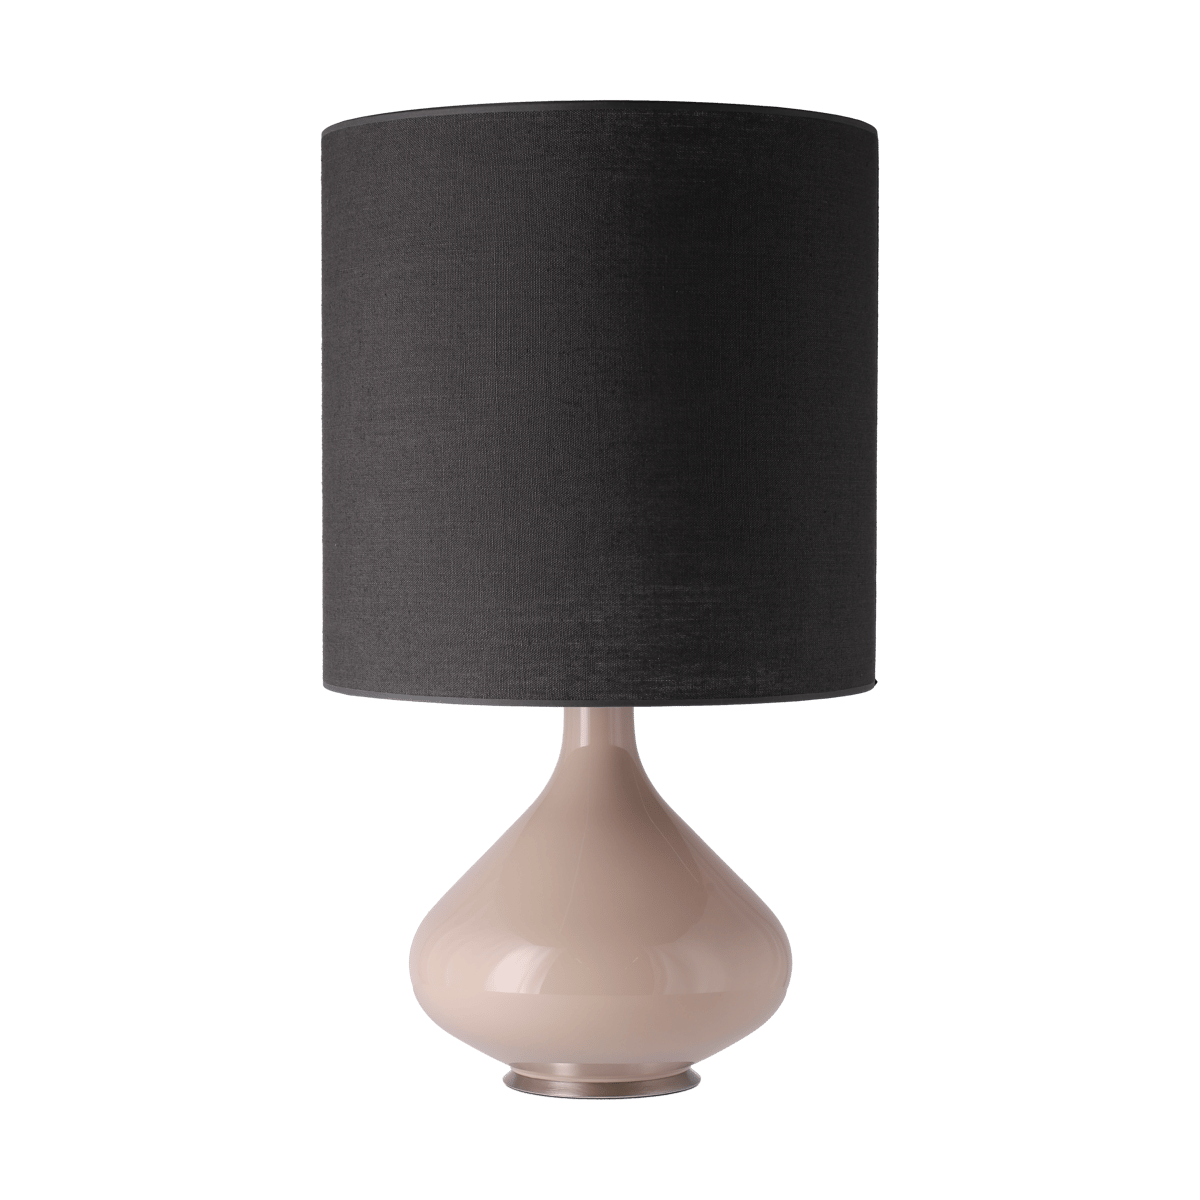 Flavia Lamps Flavia tafellamp beige lampvoet Lino Negro M